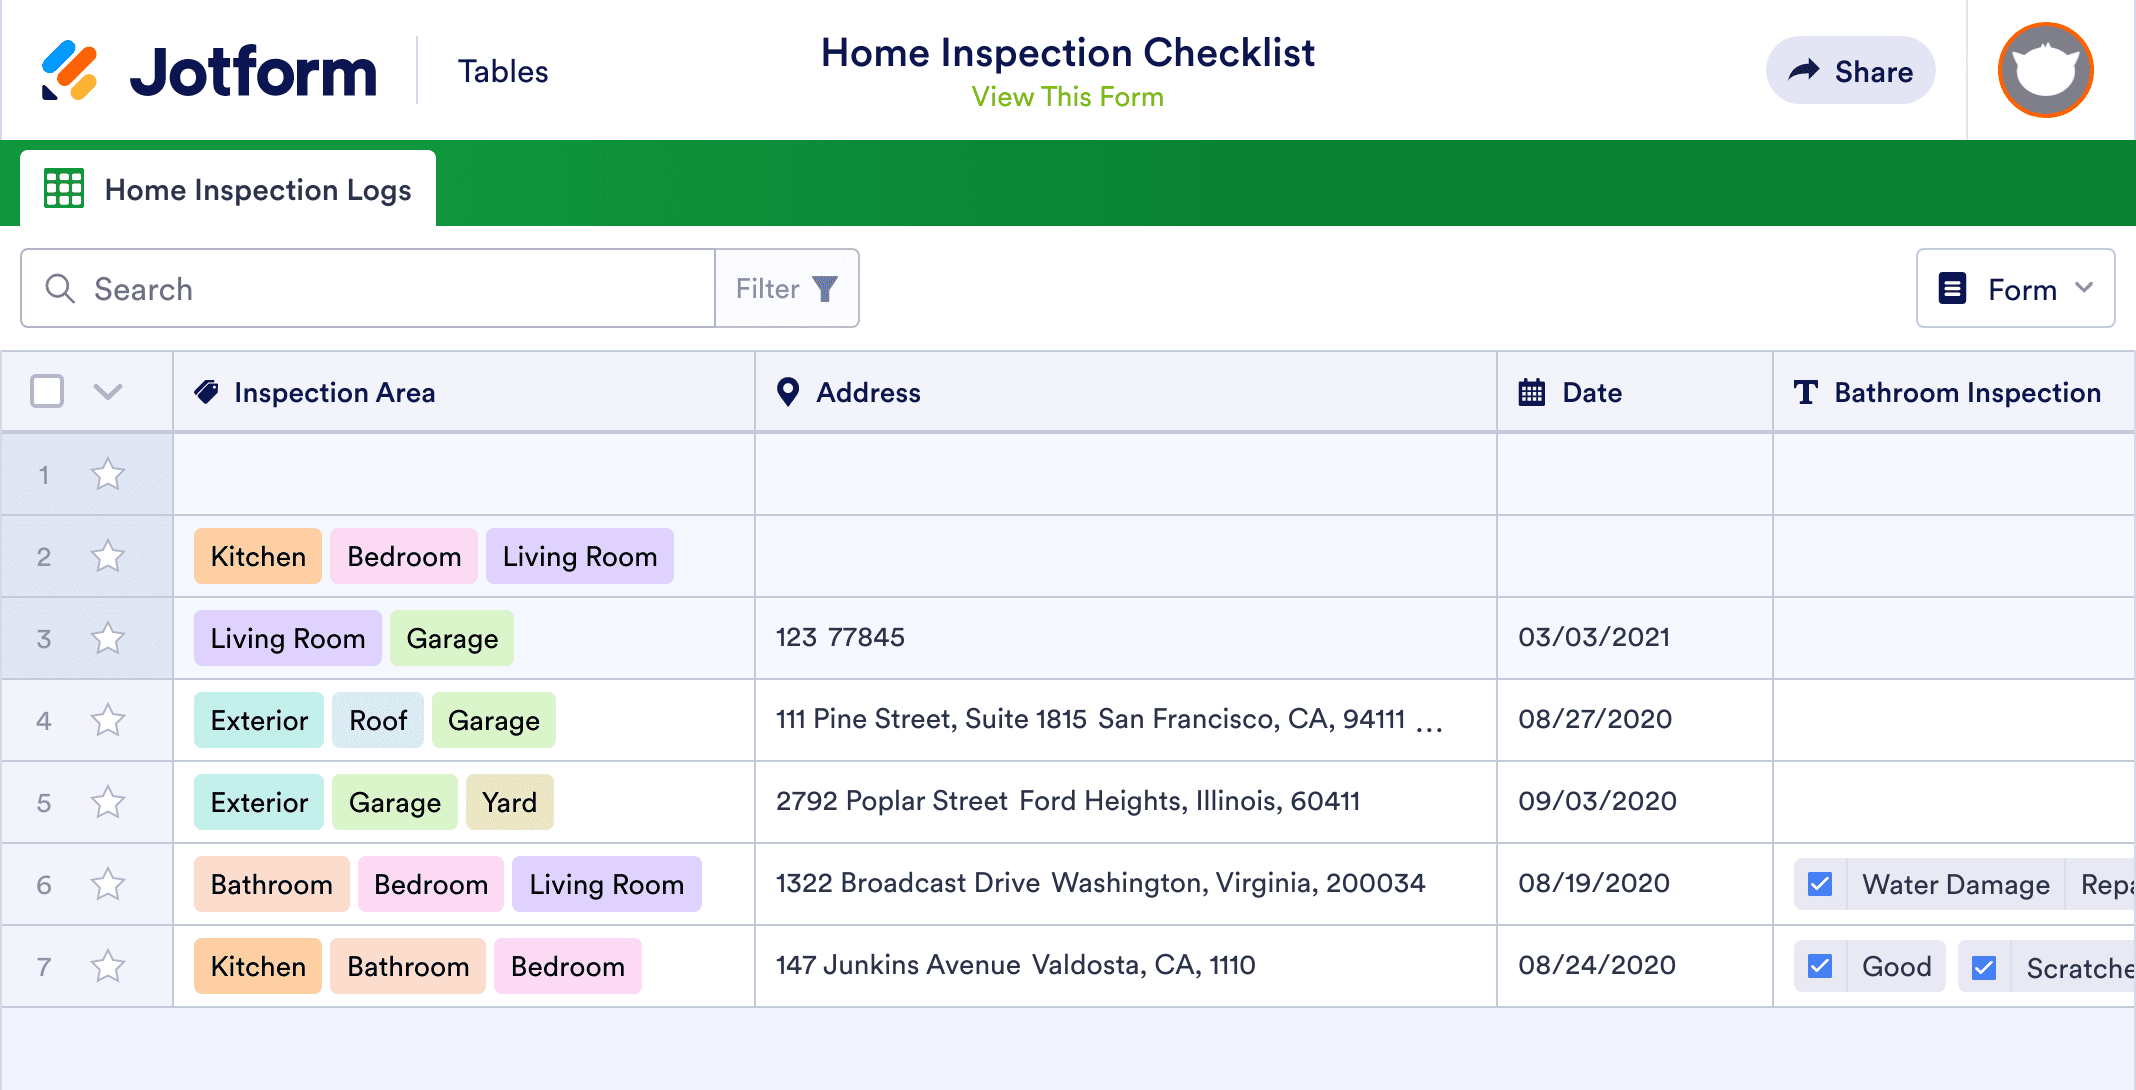 Home Inspection Checklist Template | Jotform Tables